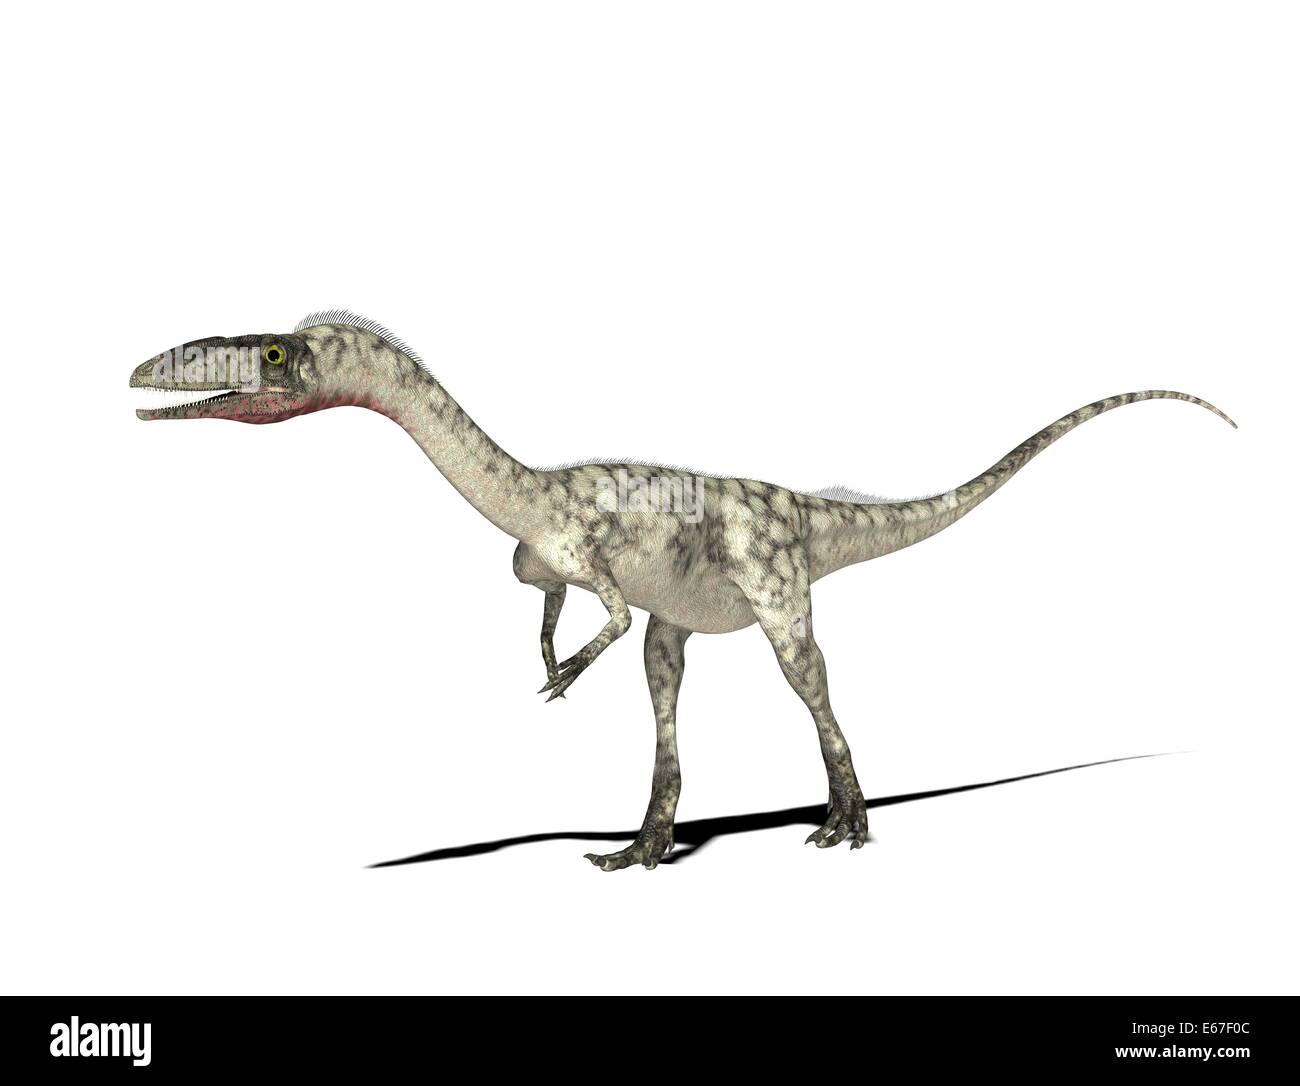 Dinosaurier Coelophysis / dinosaur Coelophysis Stock Photo